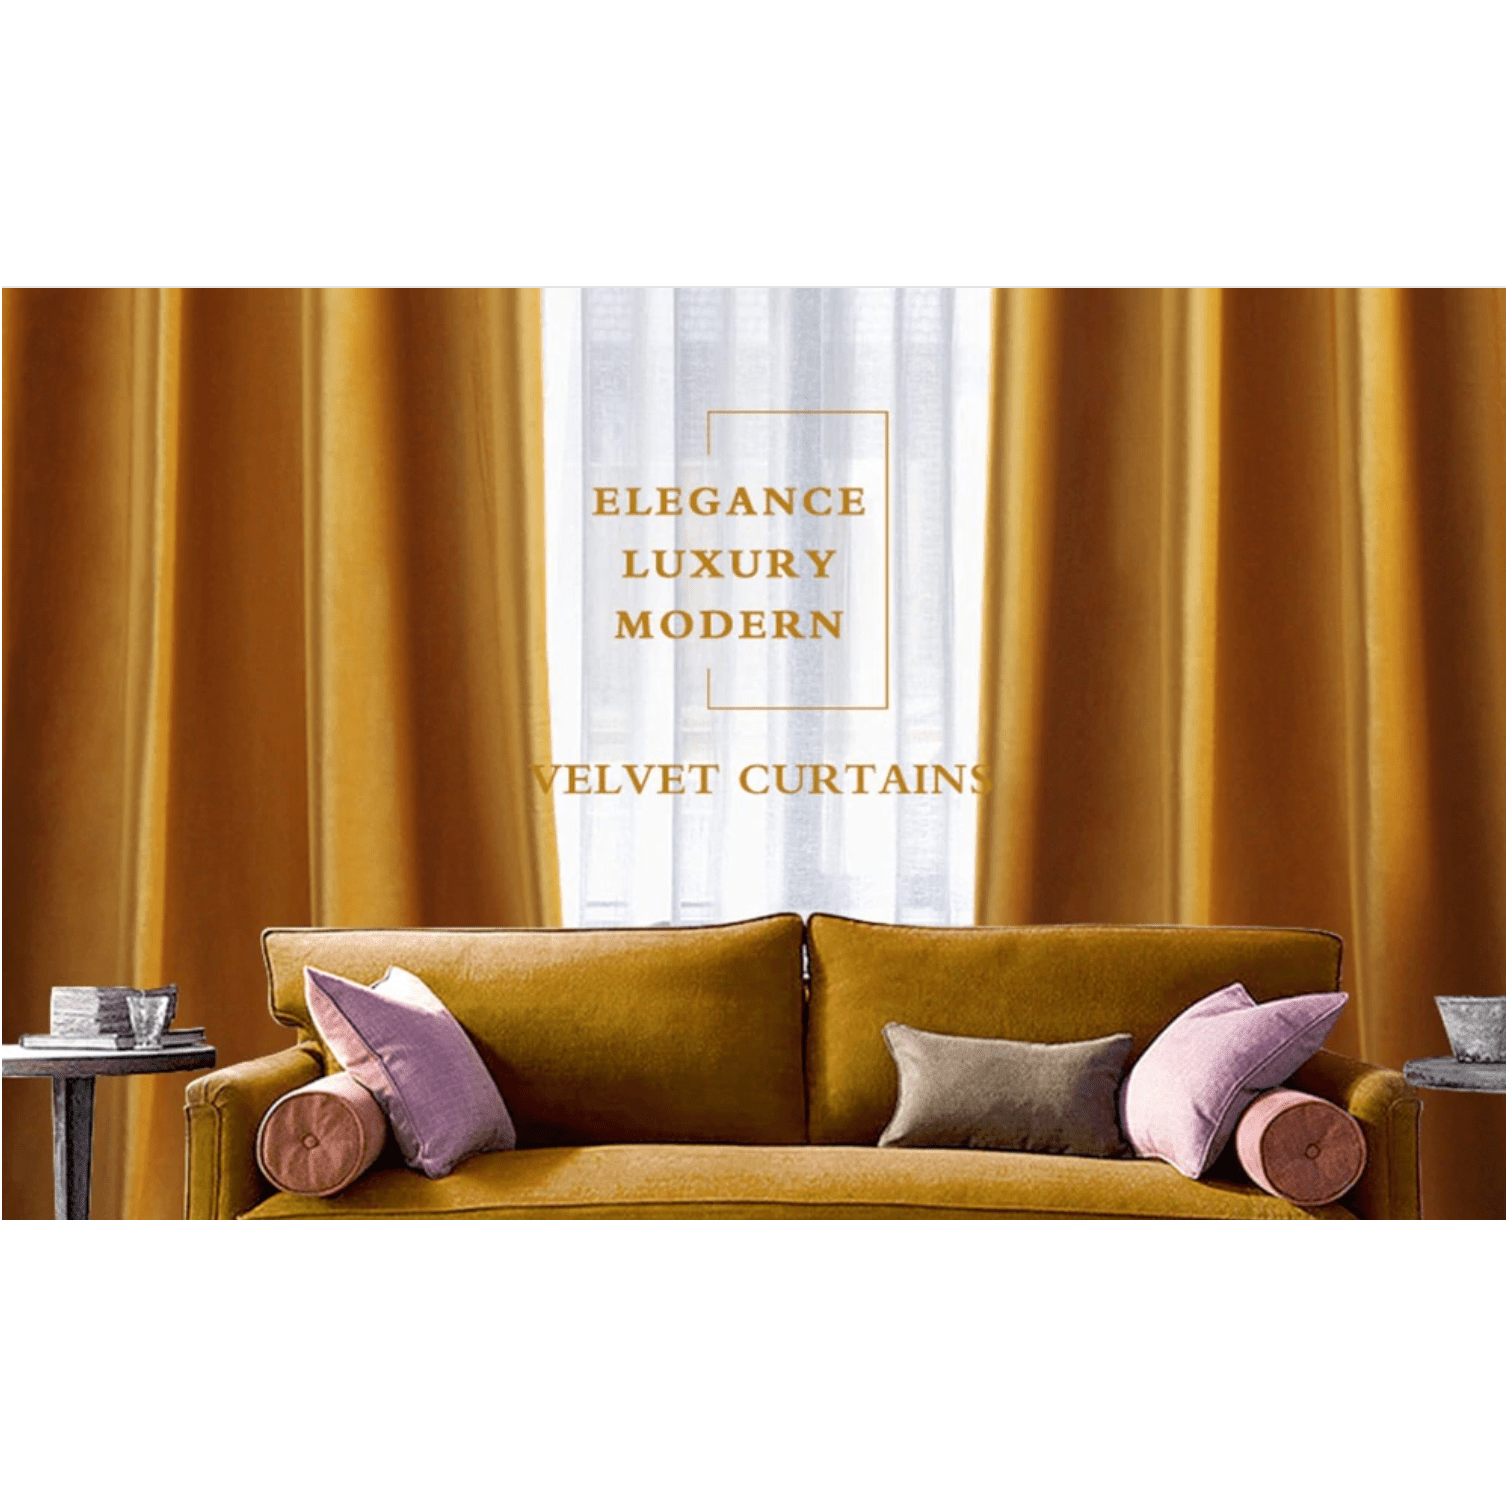 Brittany Velvet Plain Curtains - Yellow